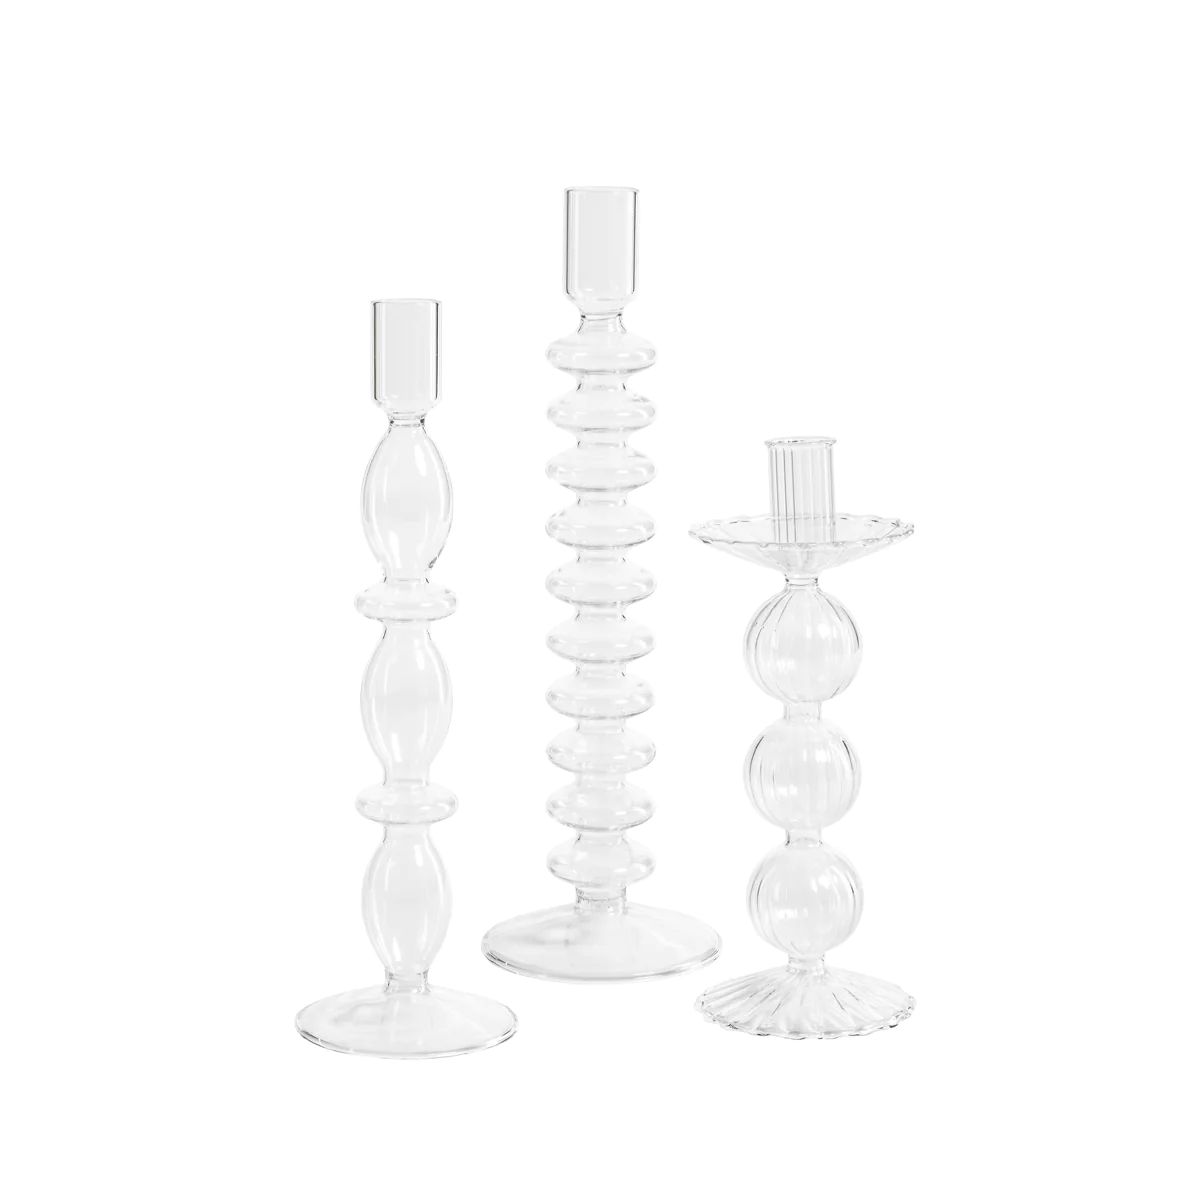 Sculptural Glass Candleholders | Tuesday Made